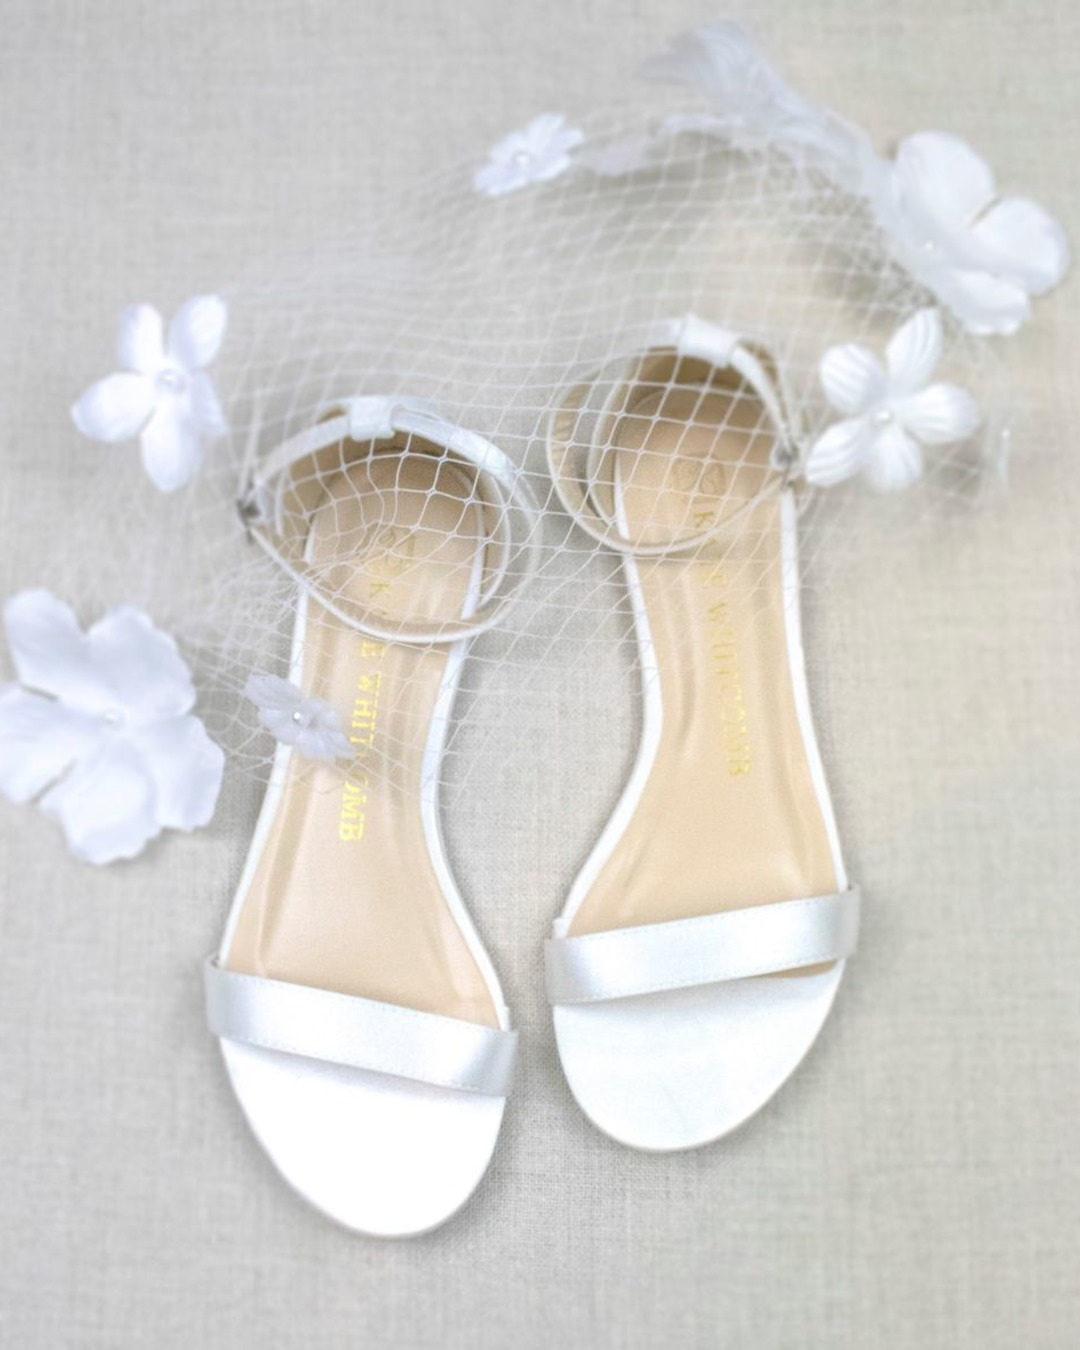 white wedding sandals flat